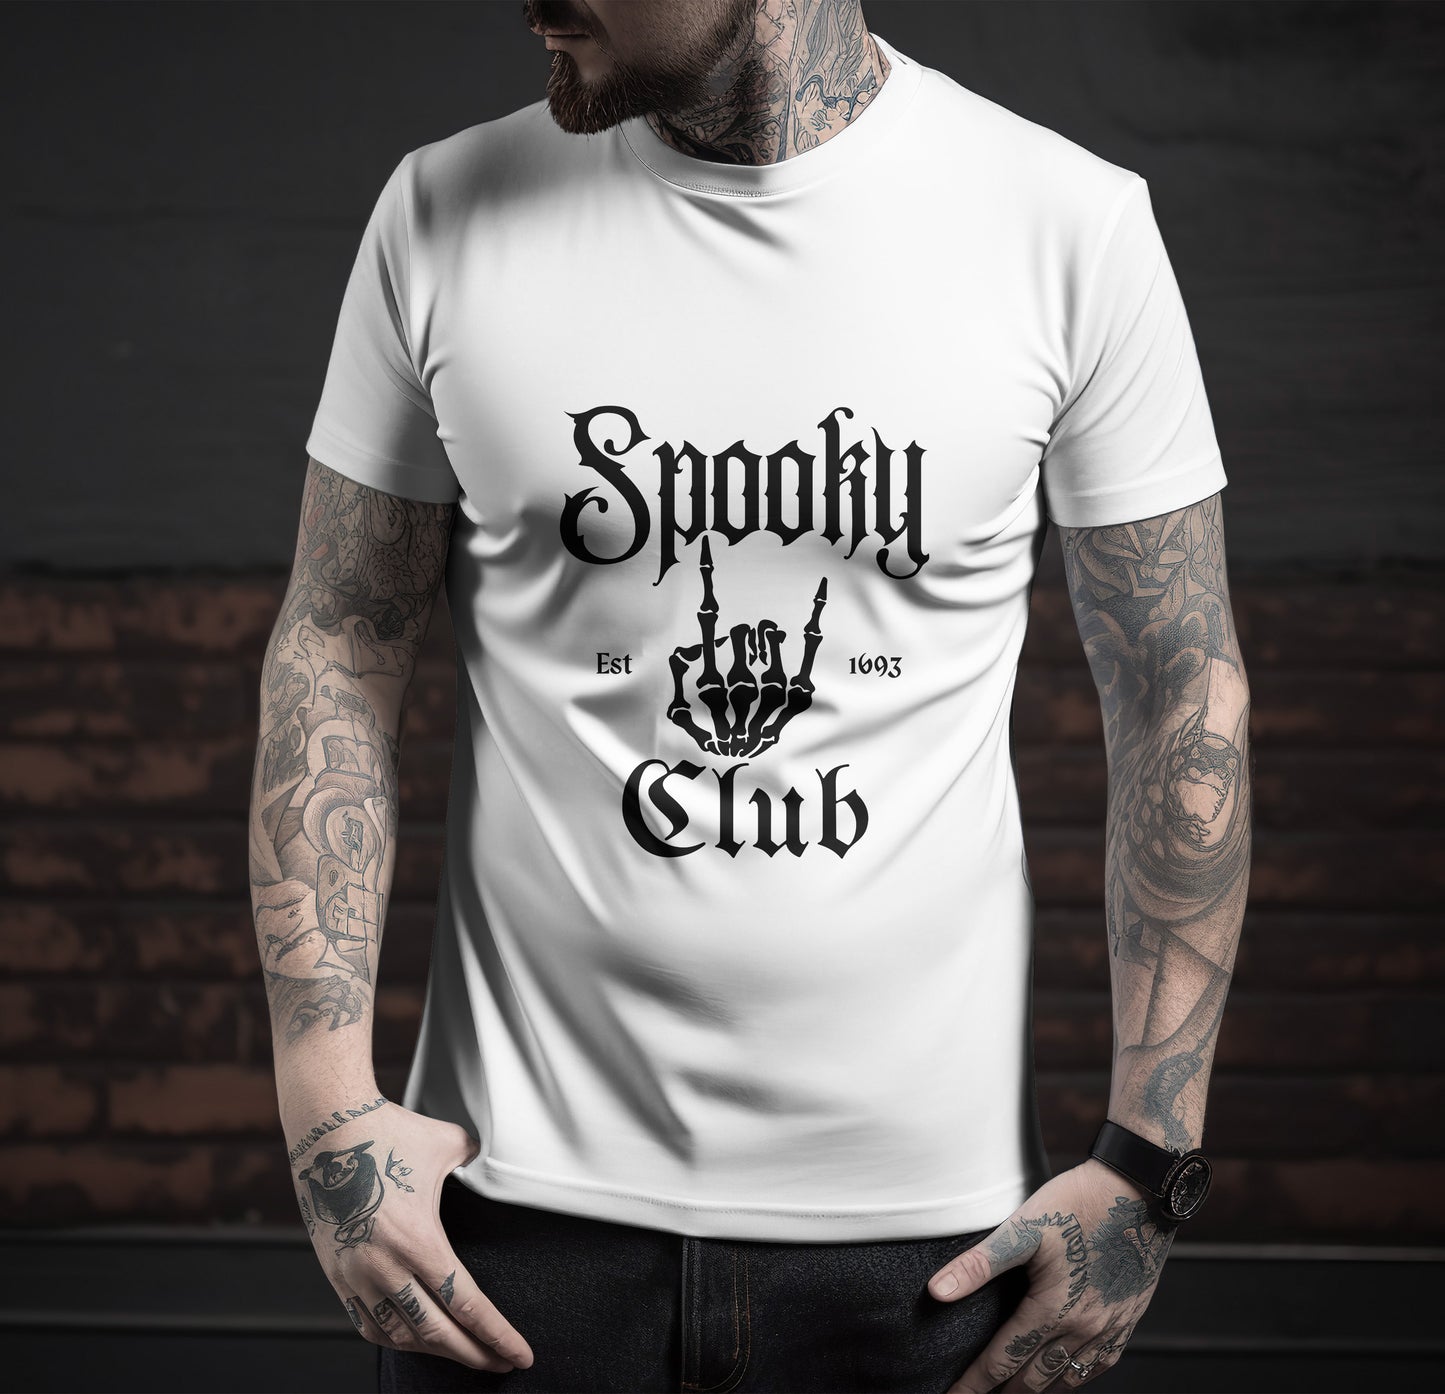 Spooky Black Printed Round Neck Regular Fit Half Sleeve T-Shirt D029